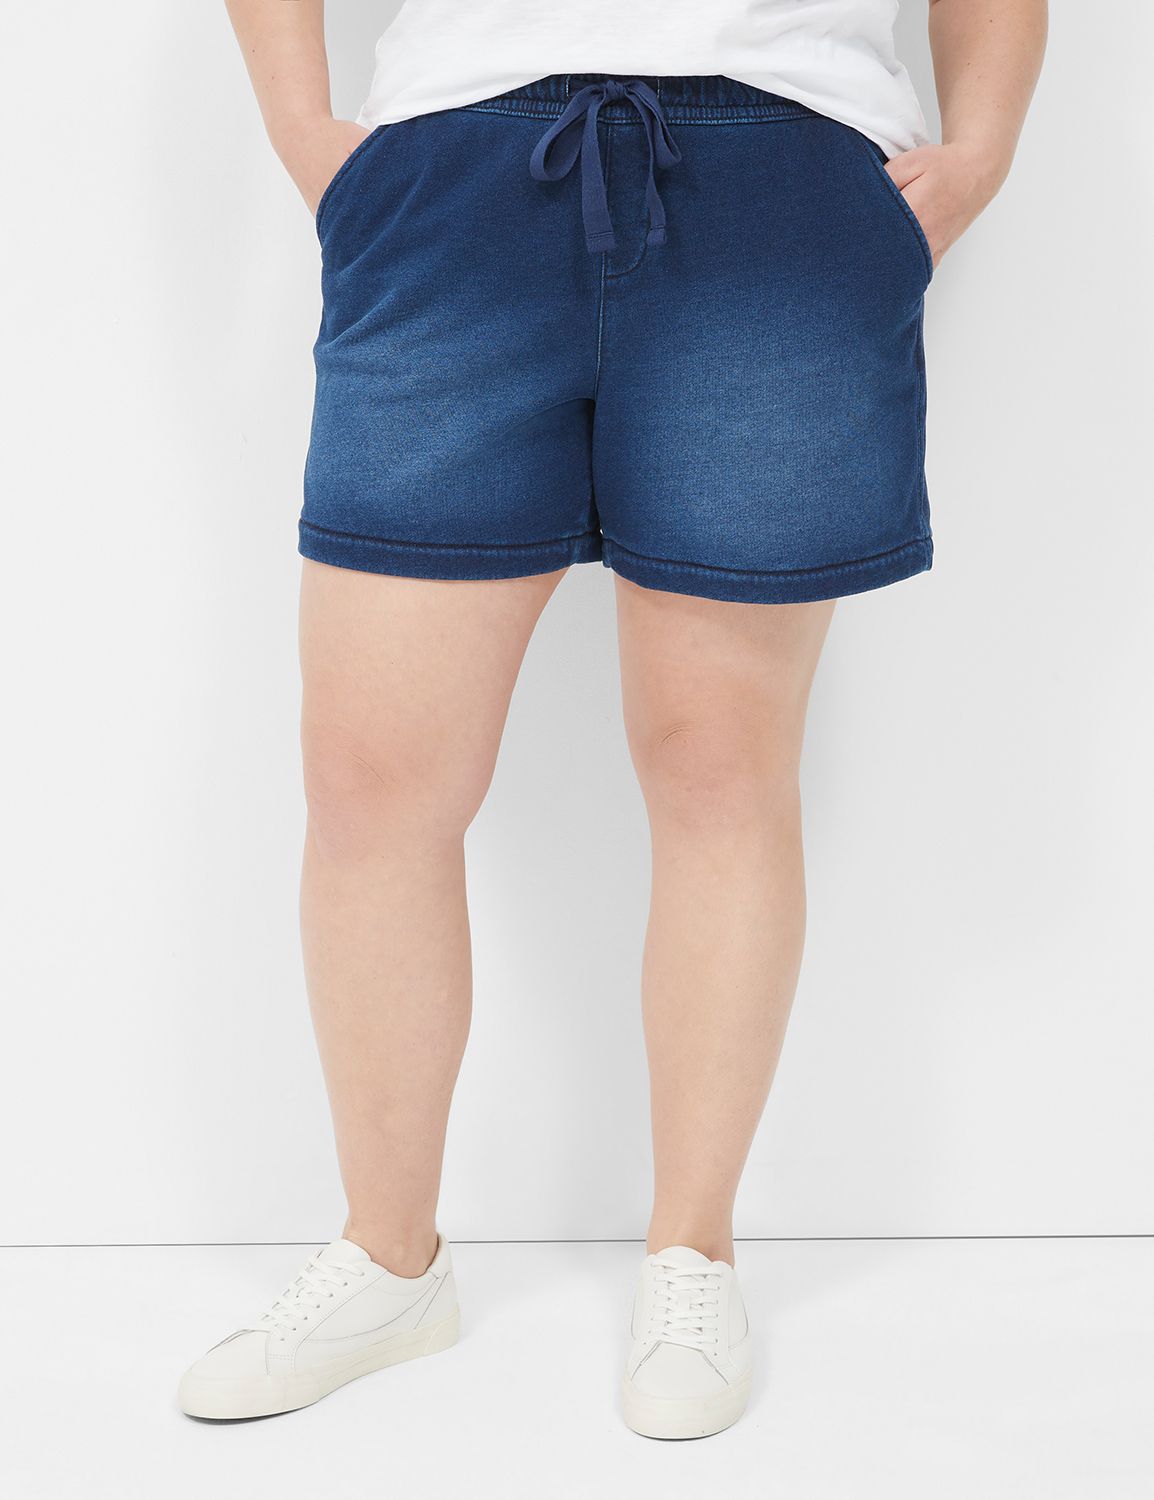 Plus Size Shorts for Women